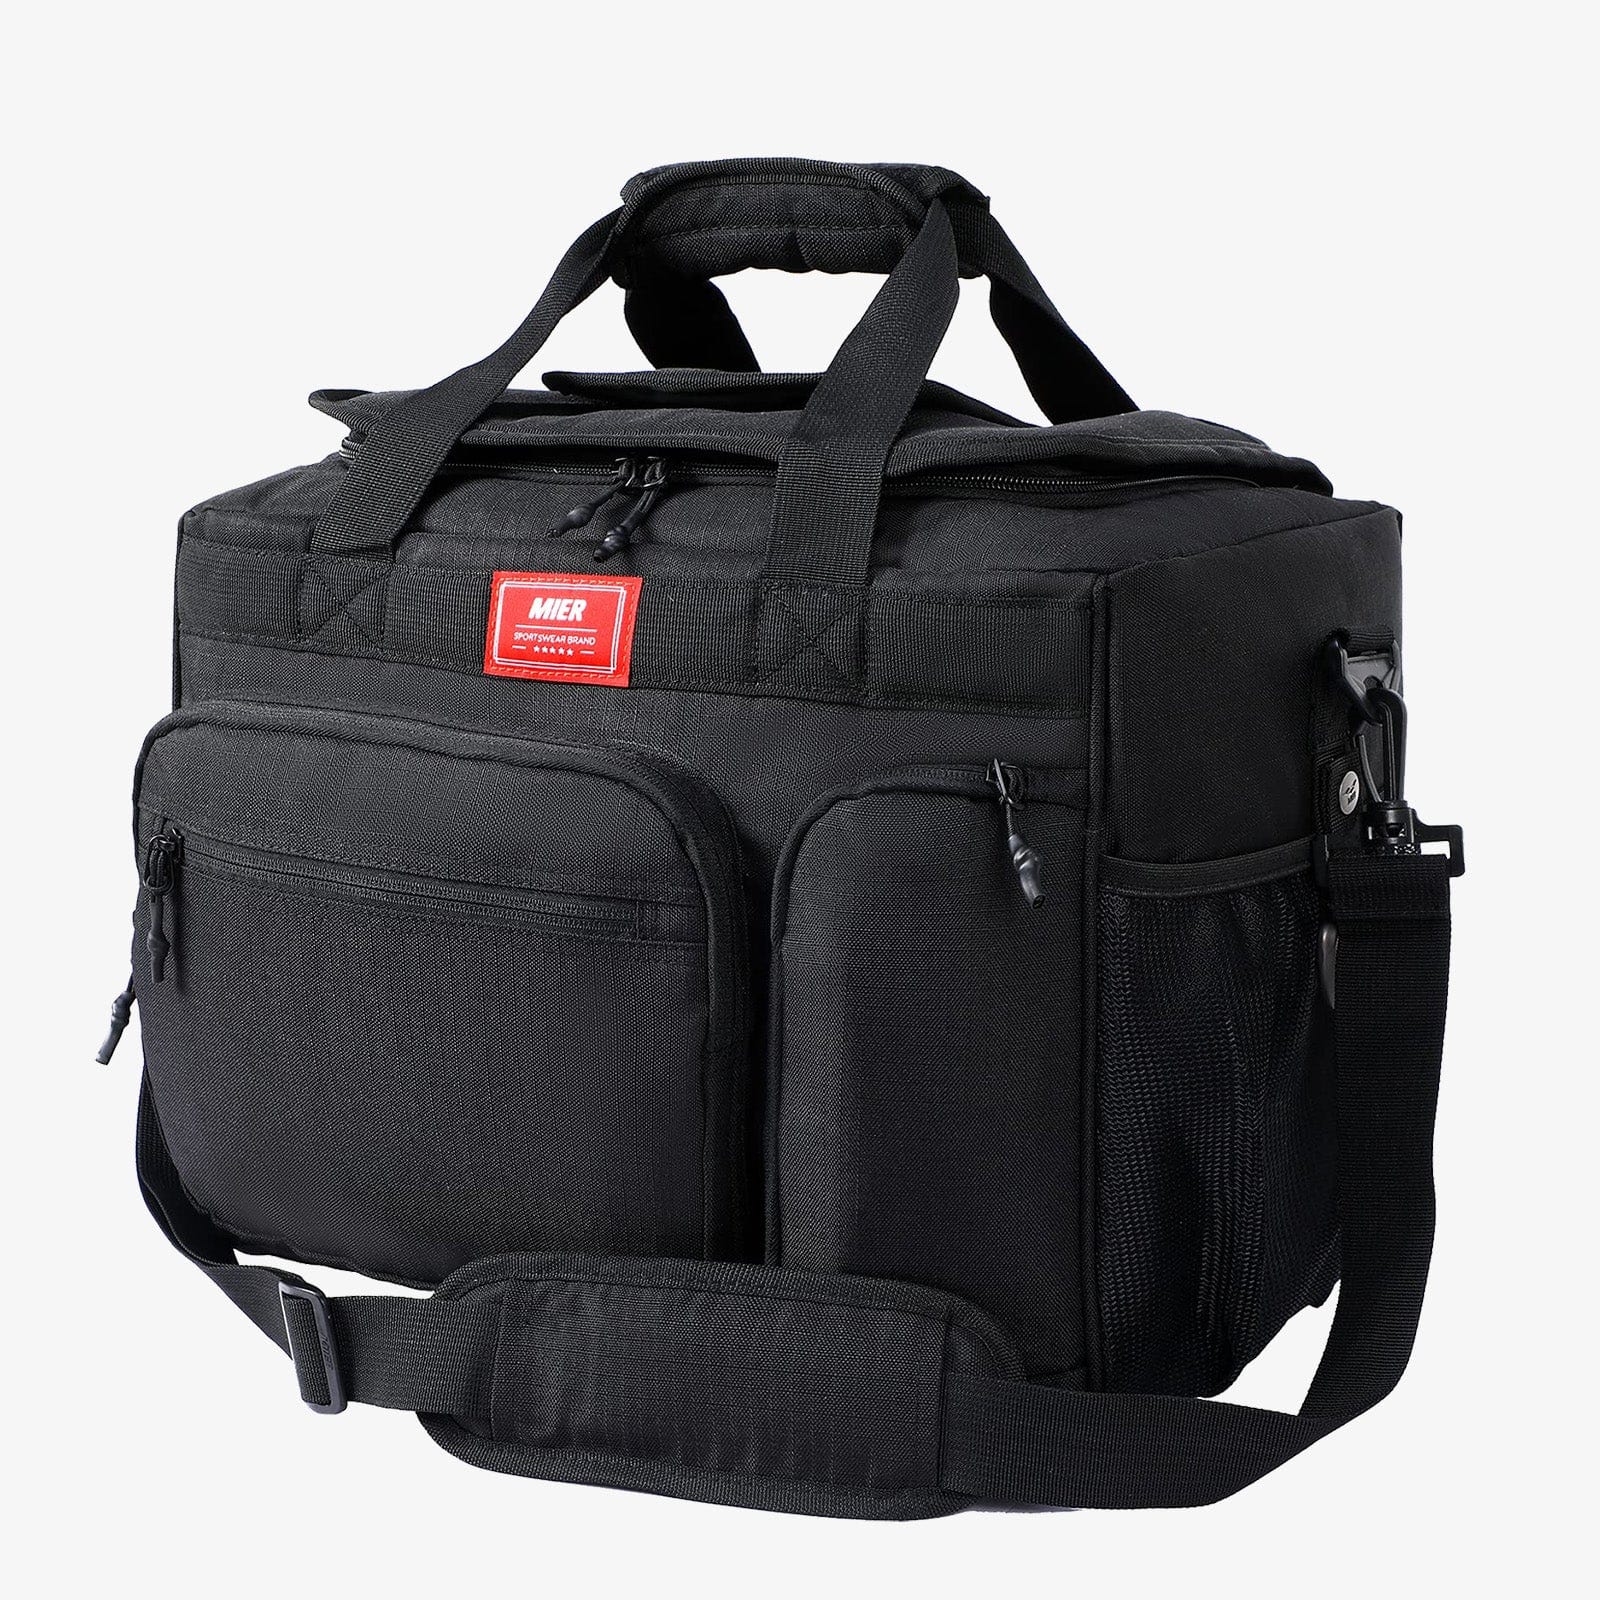 Extra Large Soft Cooler Bag with Bottle Opener, 45 Can Adult Lunch Bag Black MIER